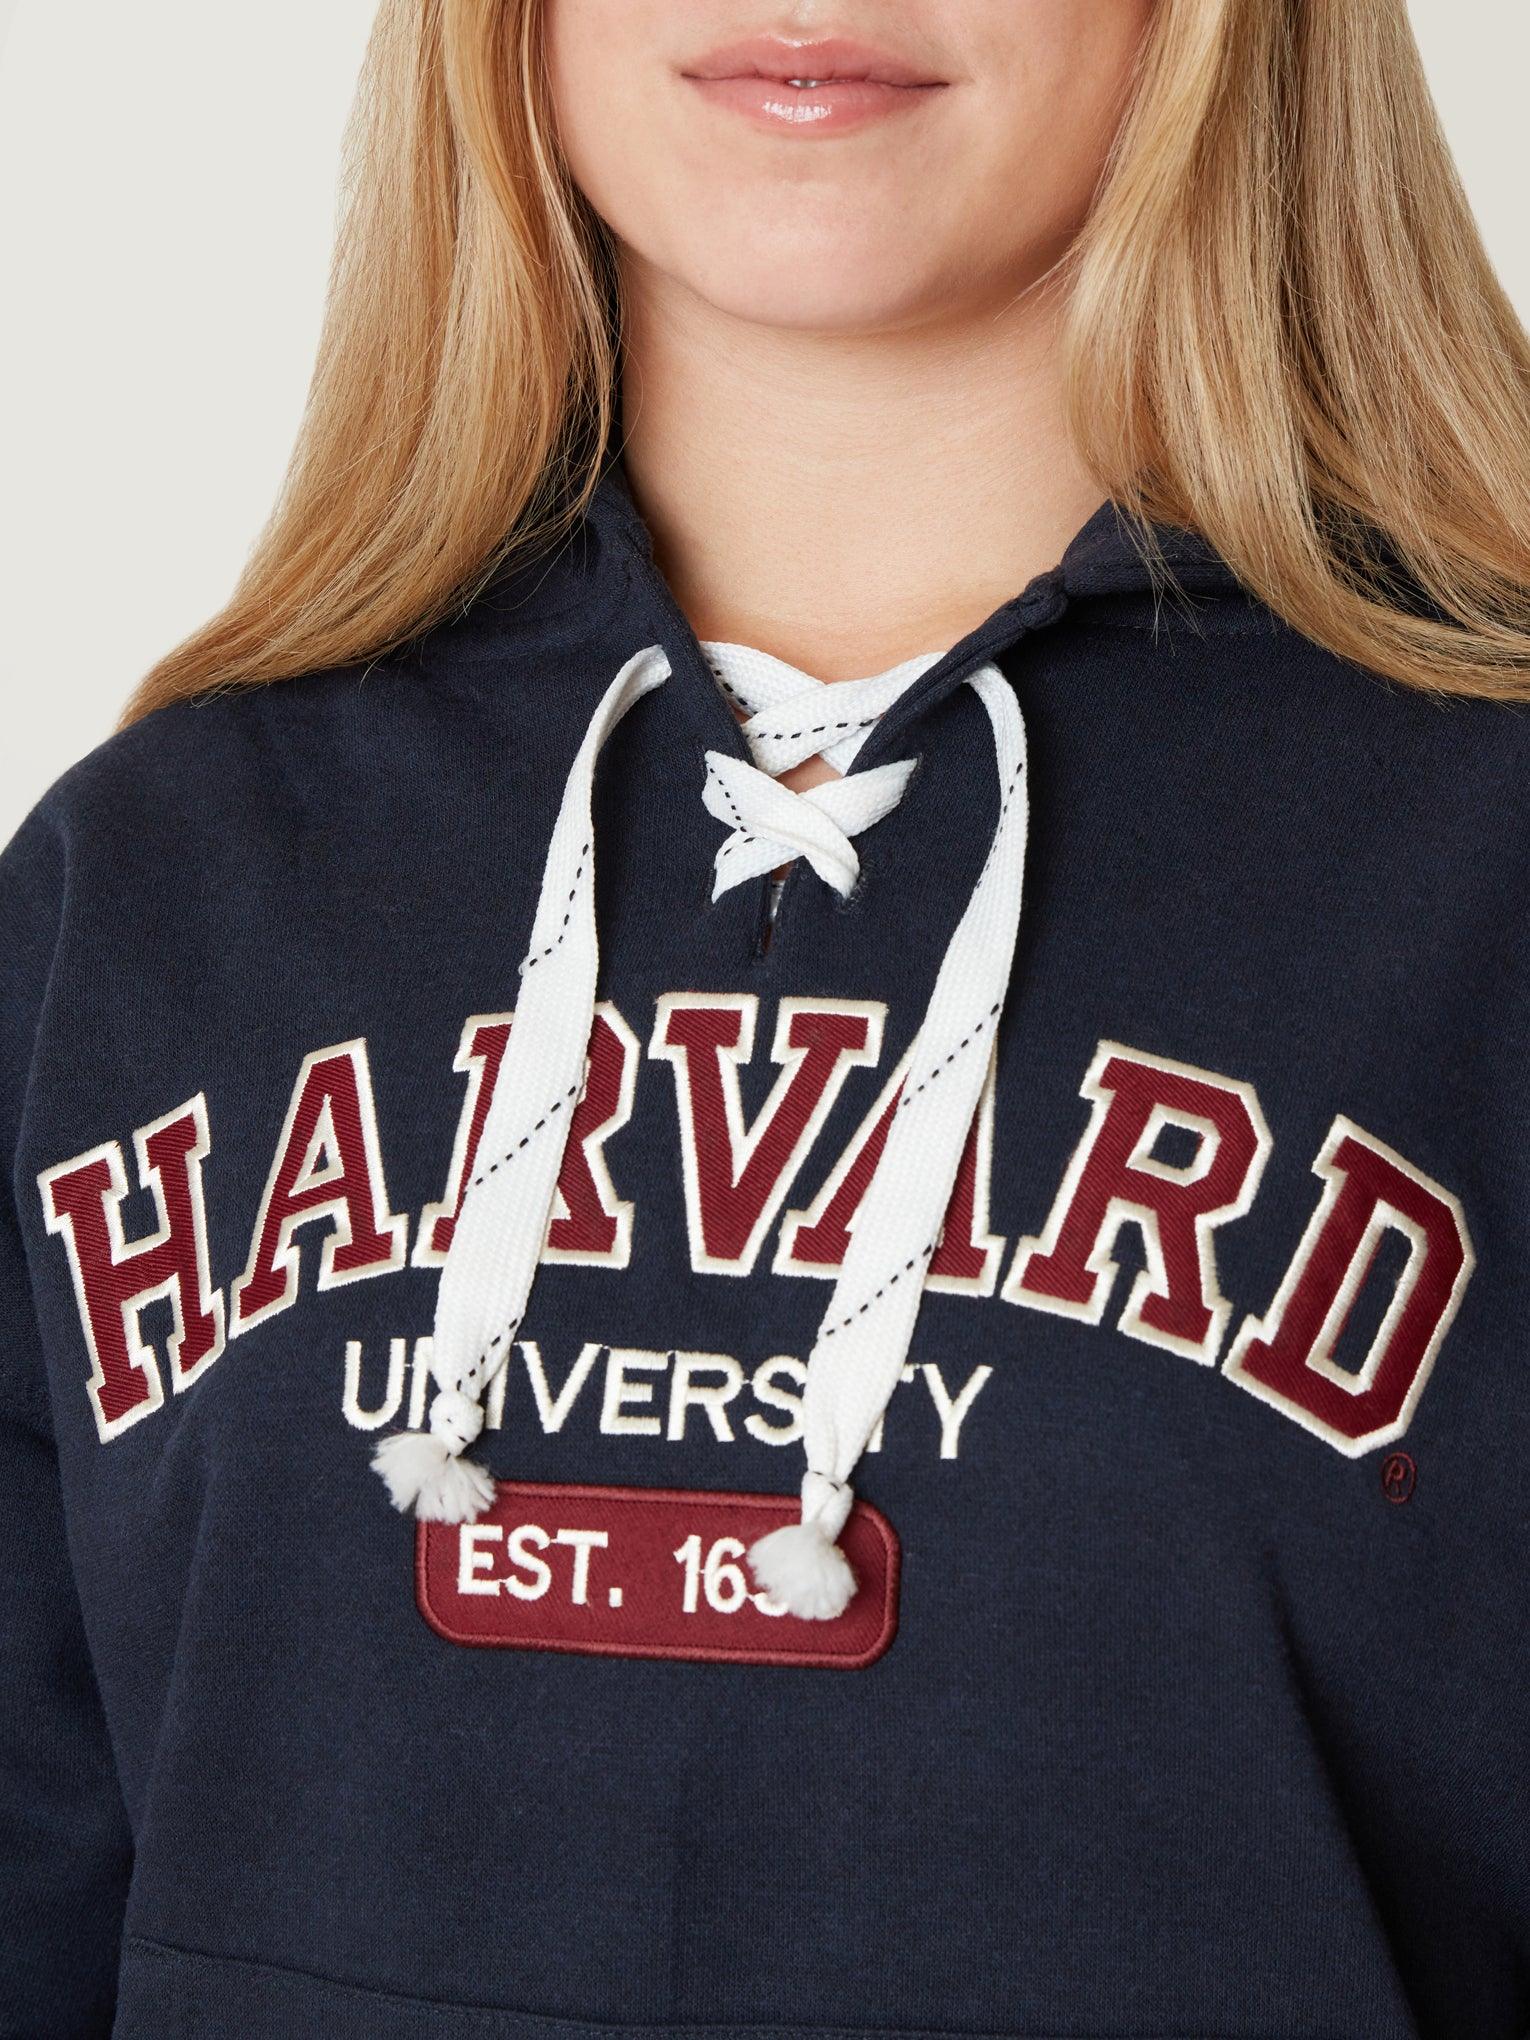 Harvard Hockey Hood